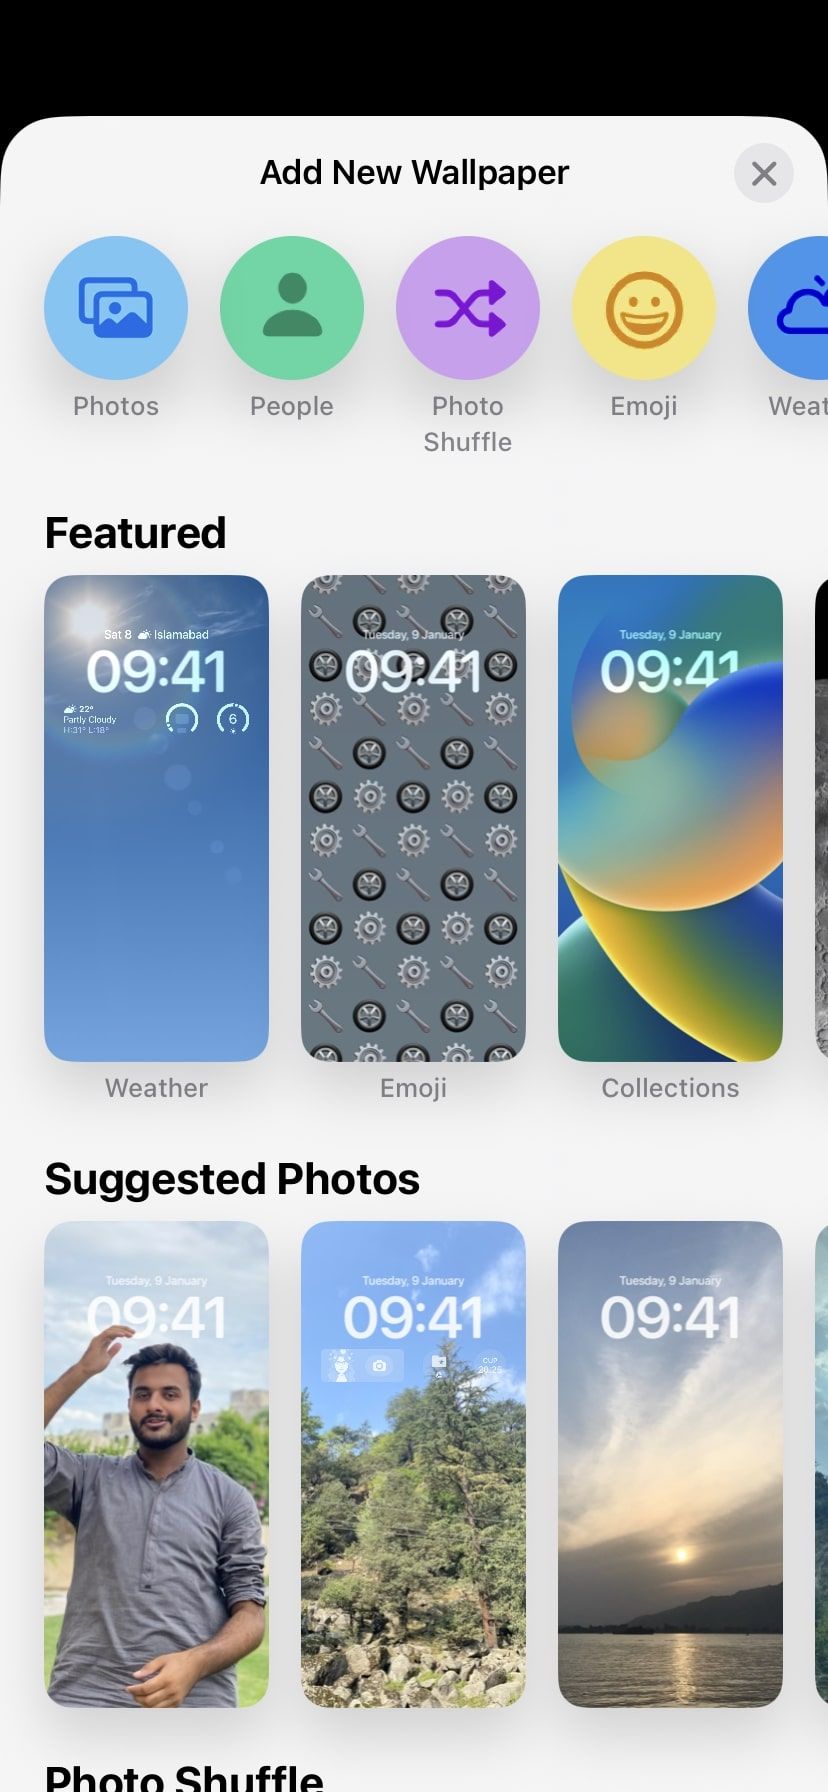 photo shuffle in iOS Lock Screen customization